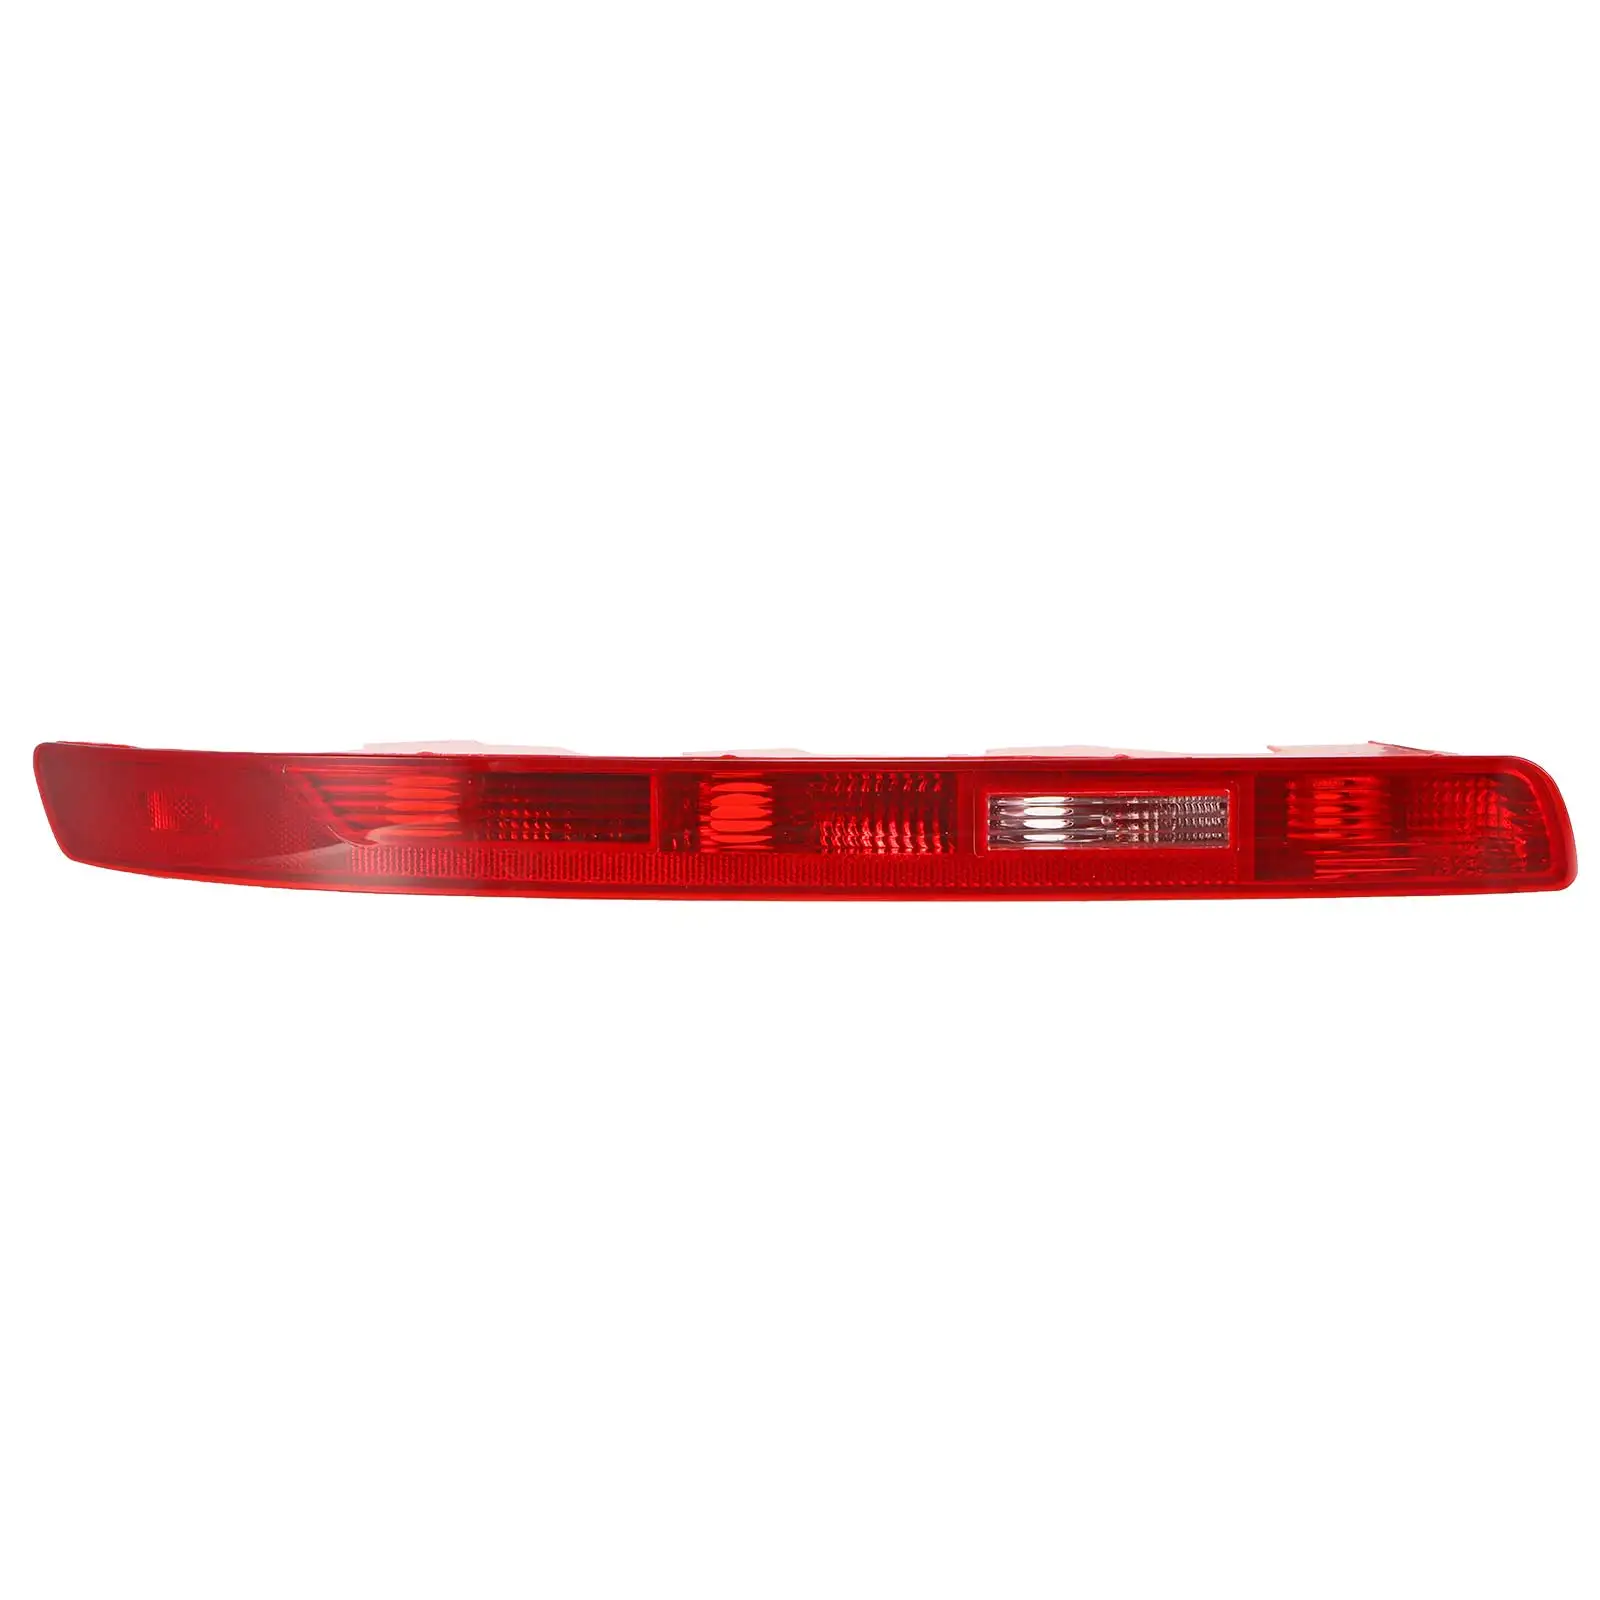 

1pcs Red Left/Right Passenger Lower Rear Bumper Tail Light For Audi Q5 09-16 противотуманные фары линзы для фар Car Accessories